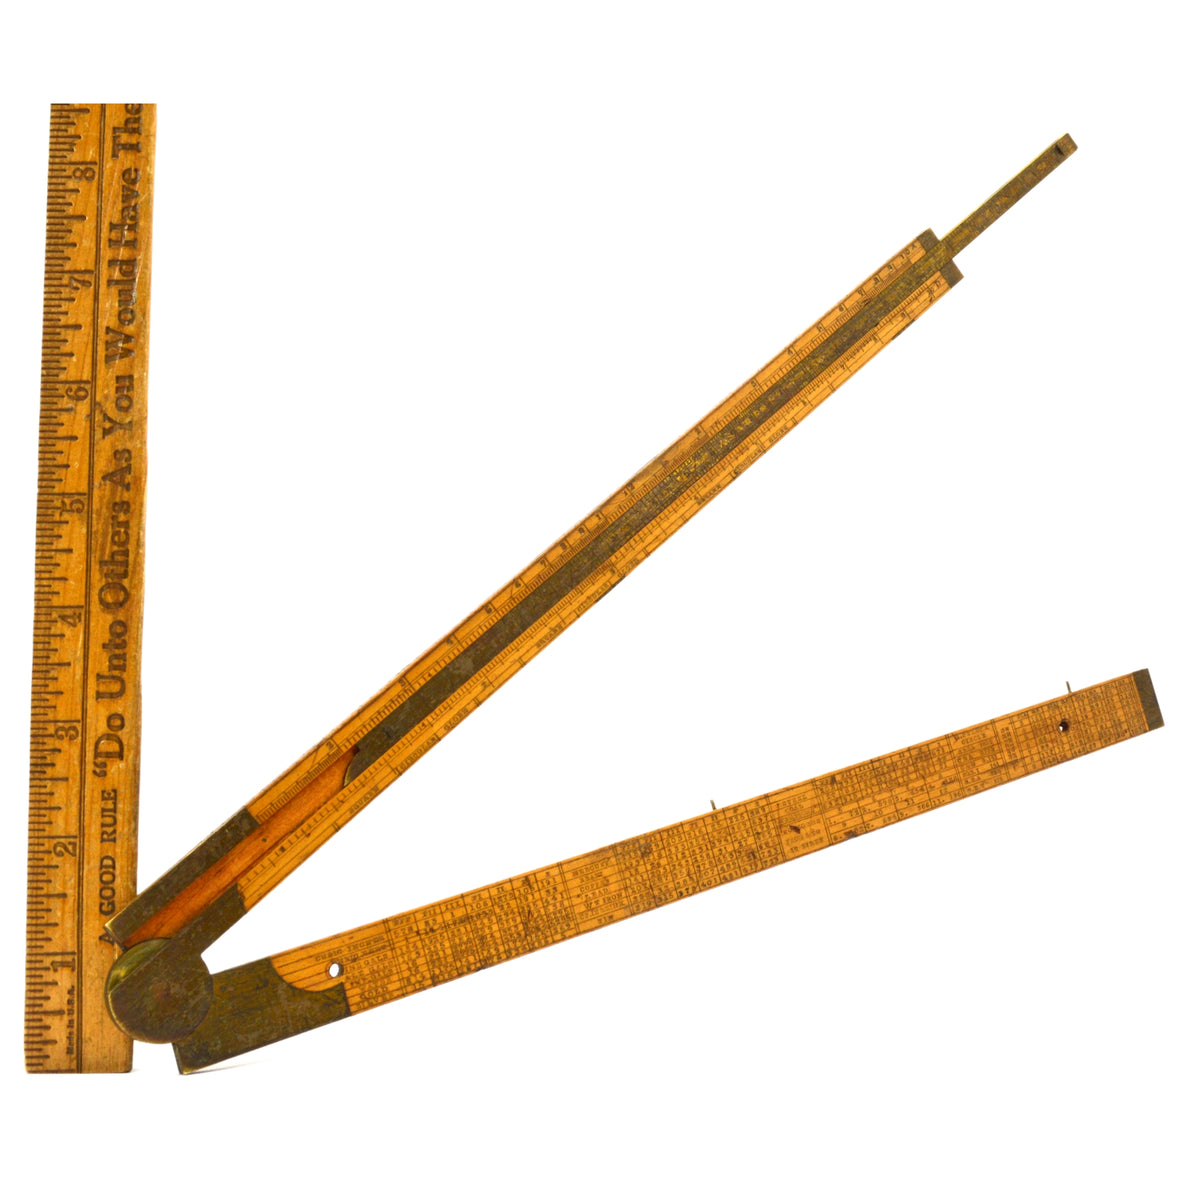 6 Brass-Bound Wood Ruler